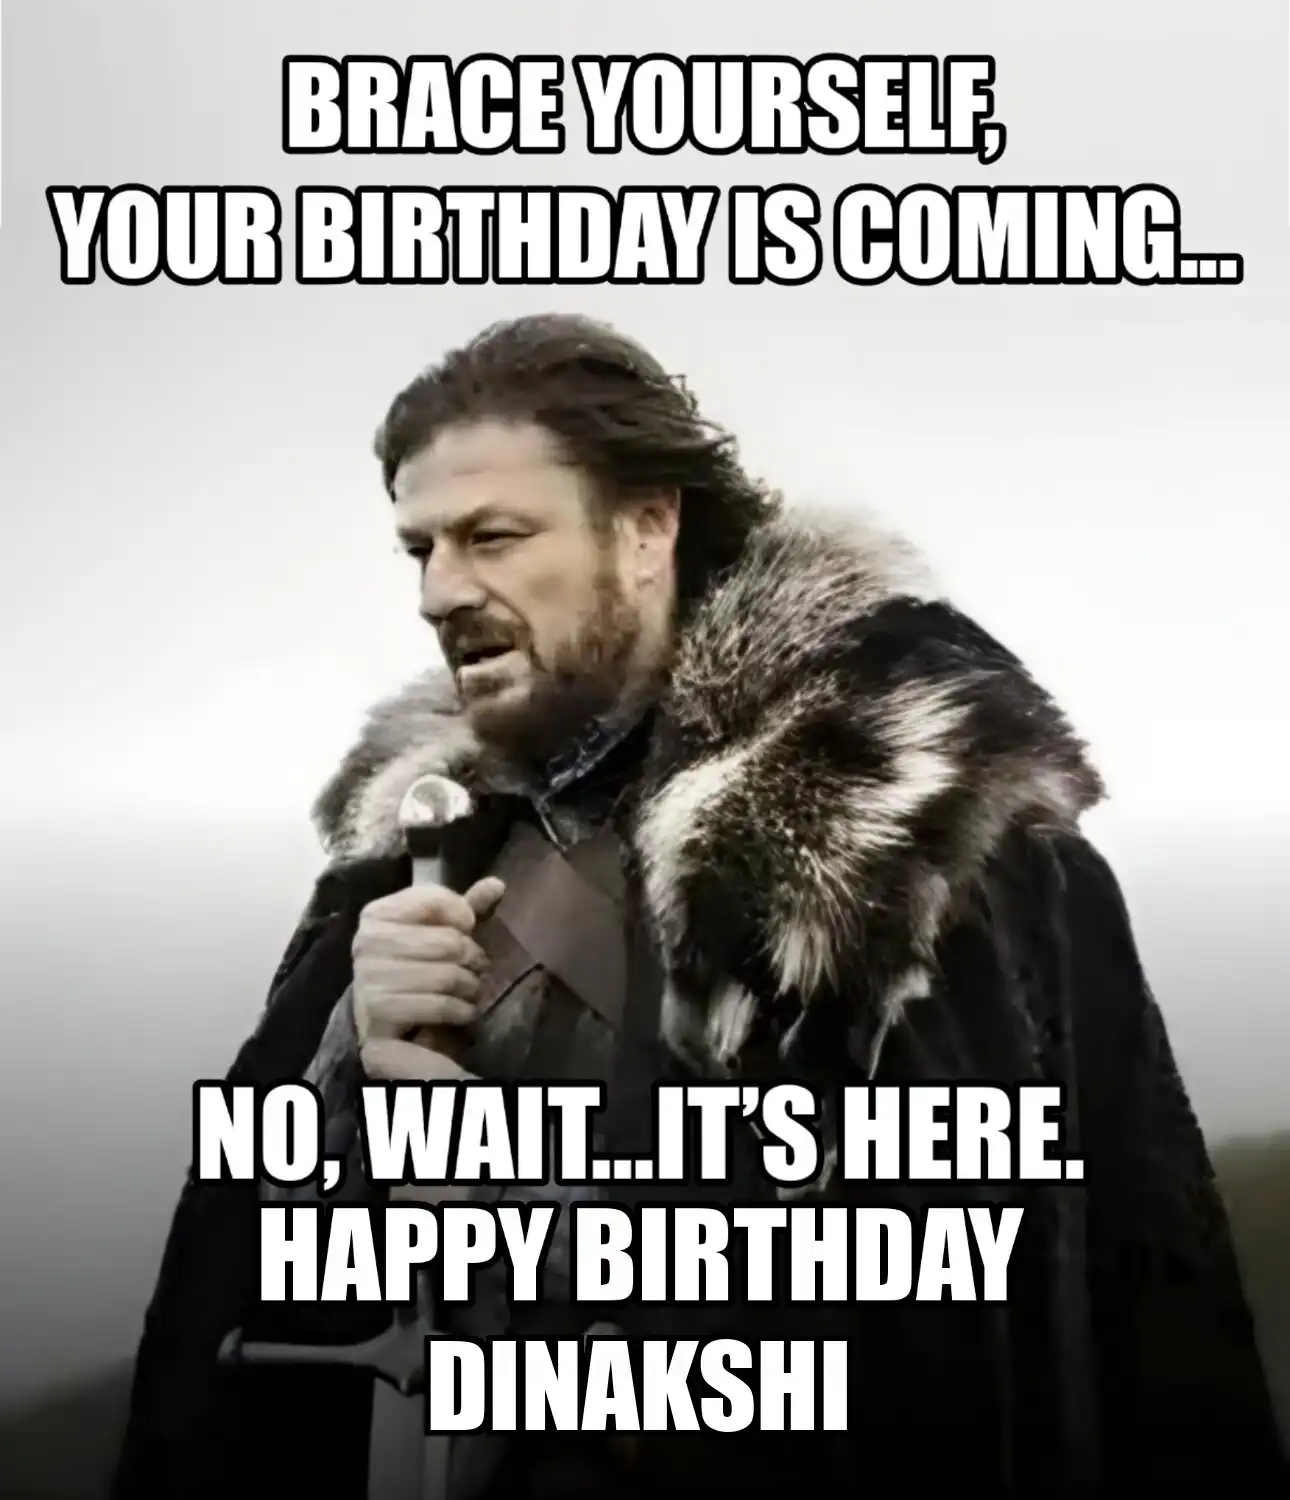 Happy Birthday Dinakshi Brace Yourself Your Birthday Is Coming Meme